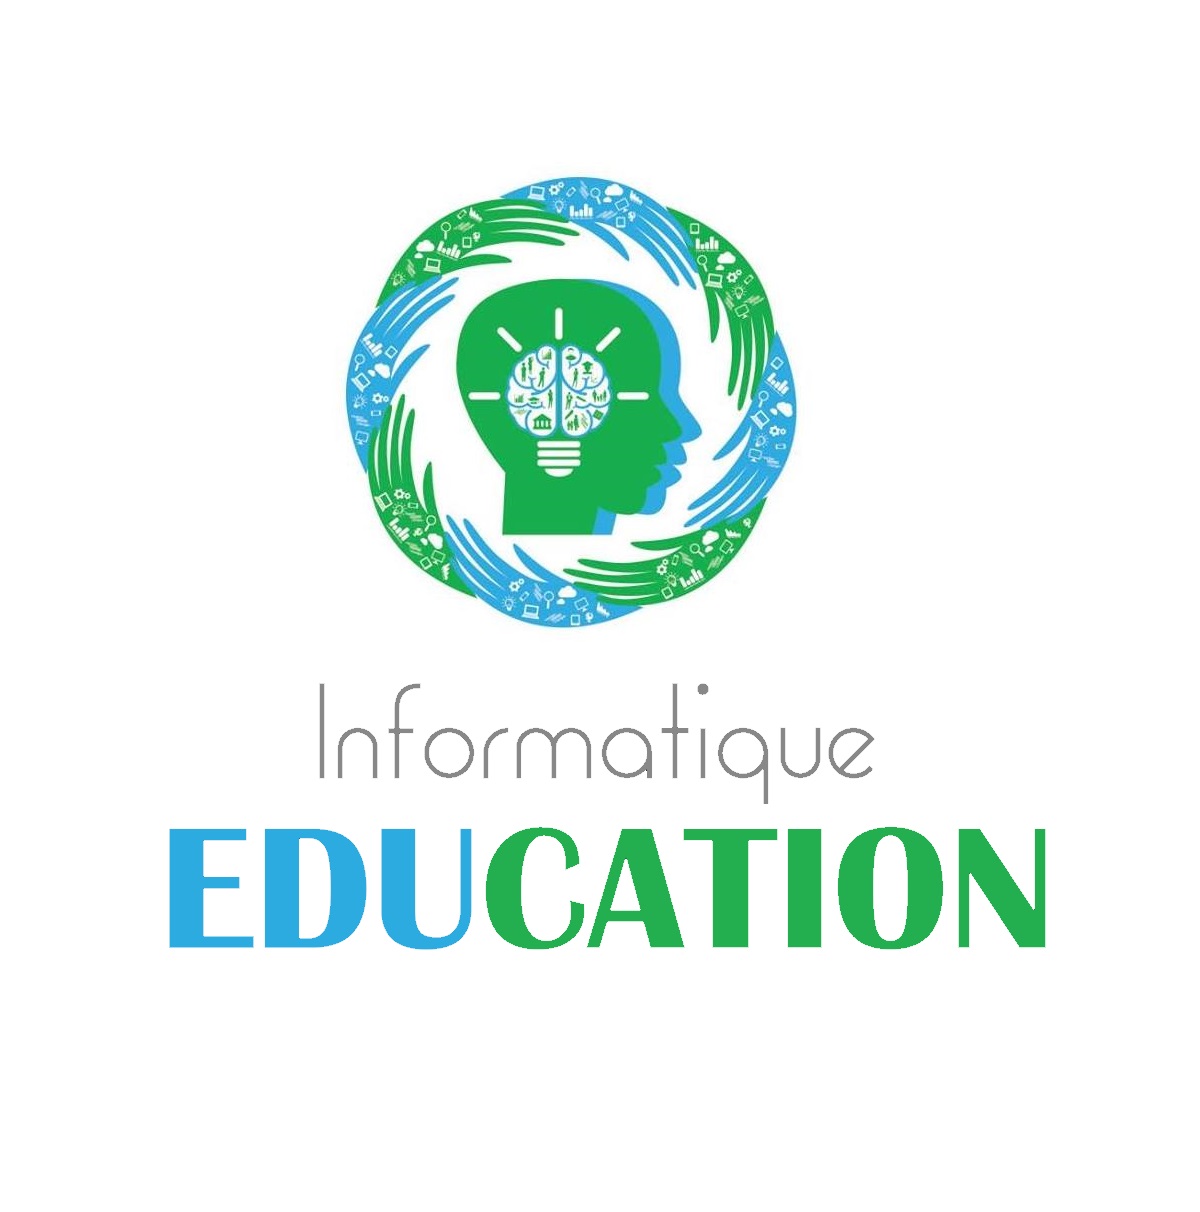 Informatique for Education Software